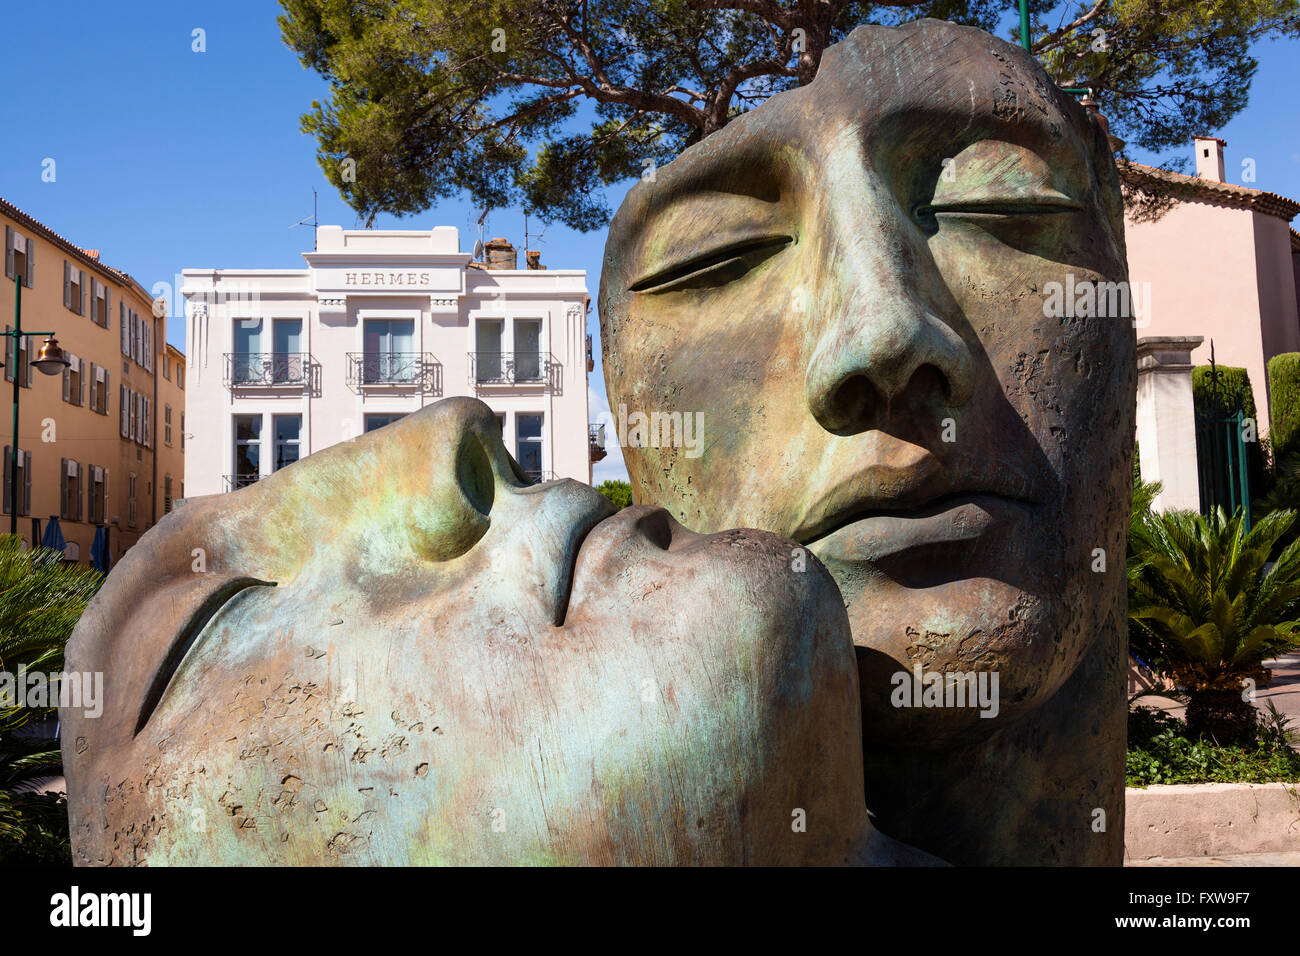 Hermanos sculpture by Igor Mitoraj, Saint Tropez, France Stock Photo